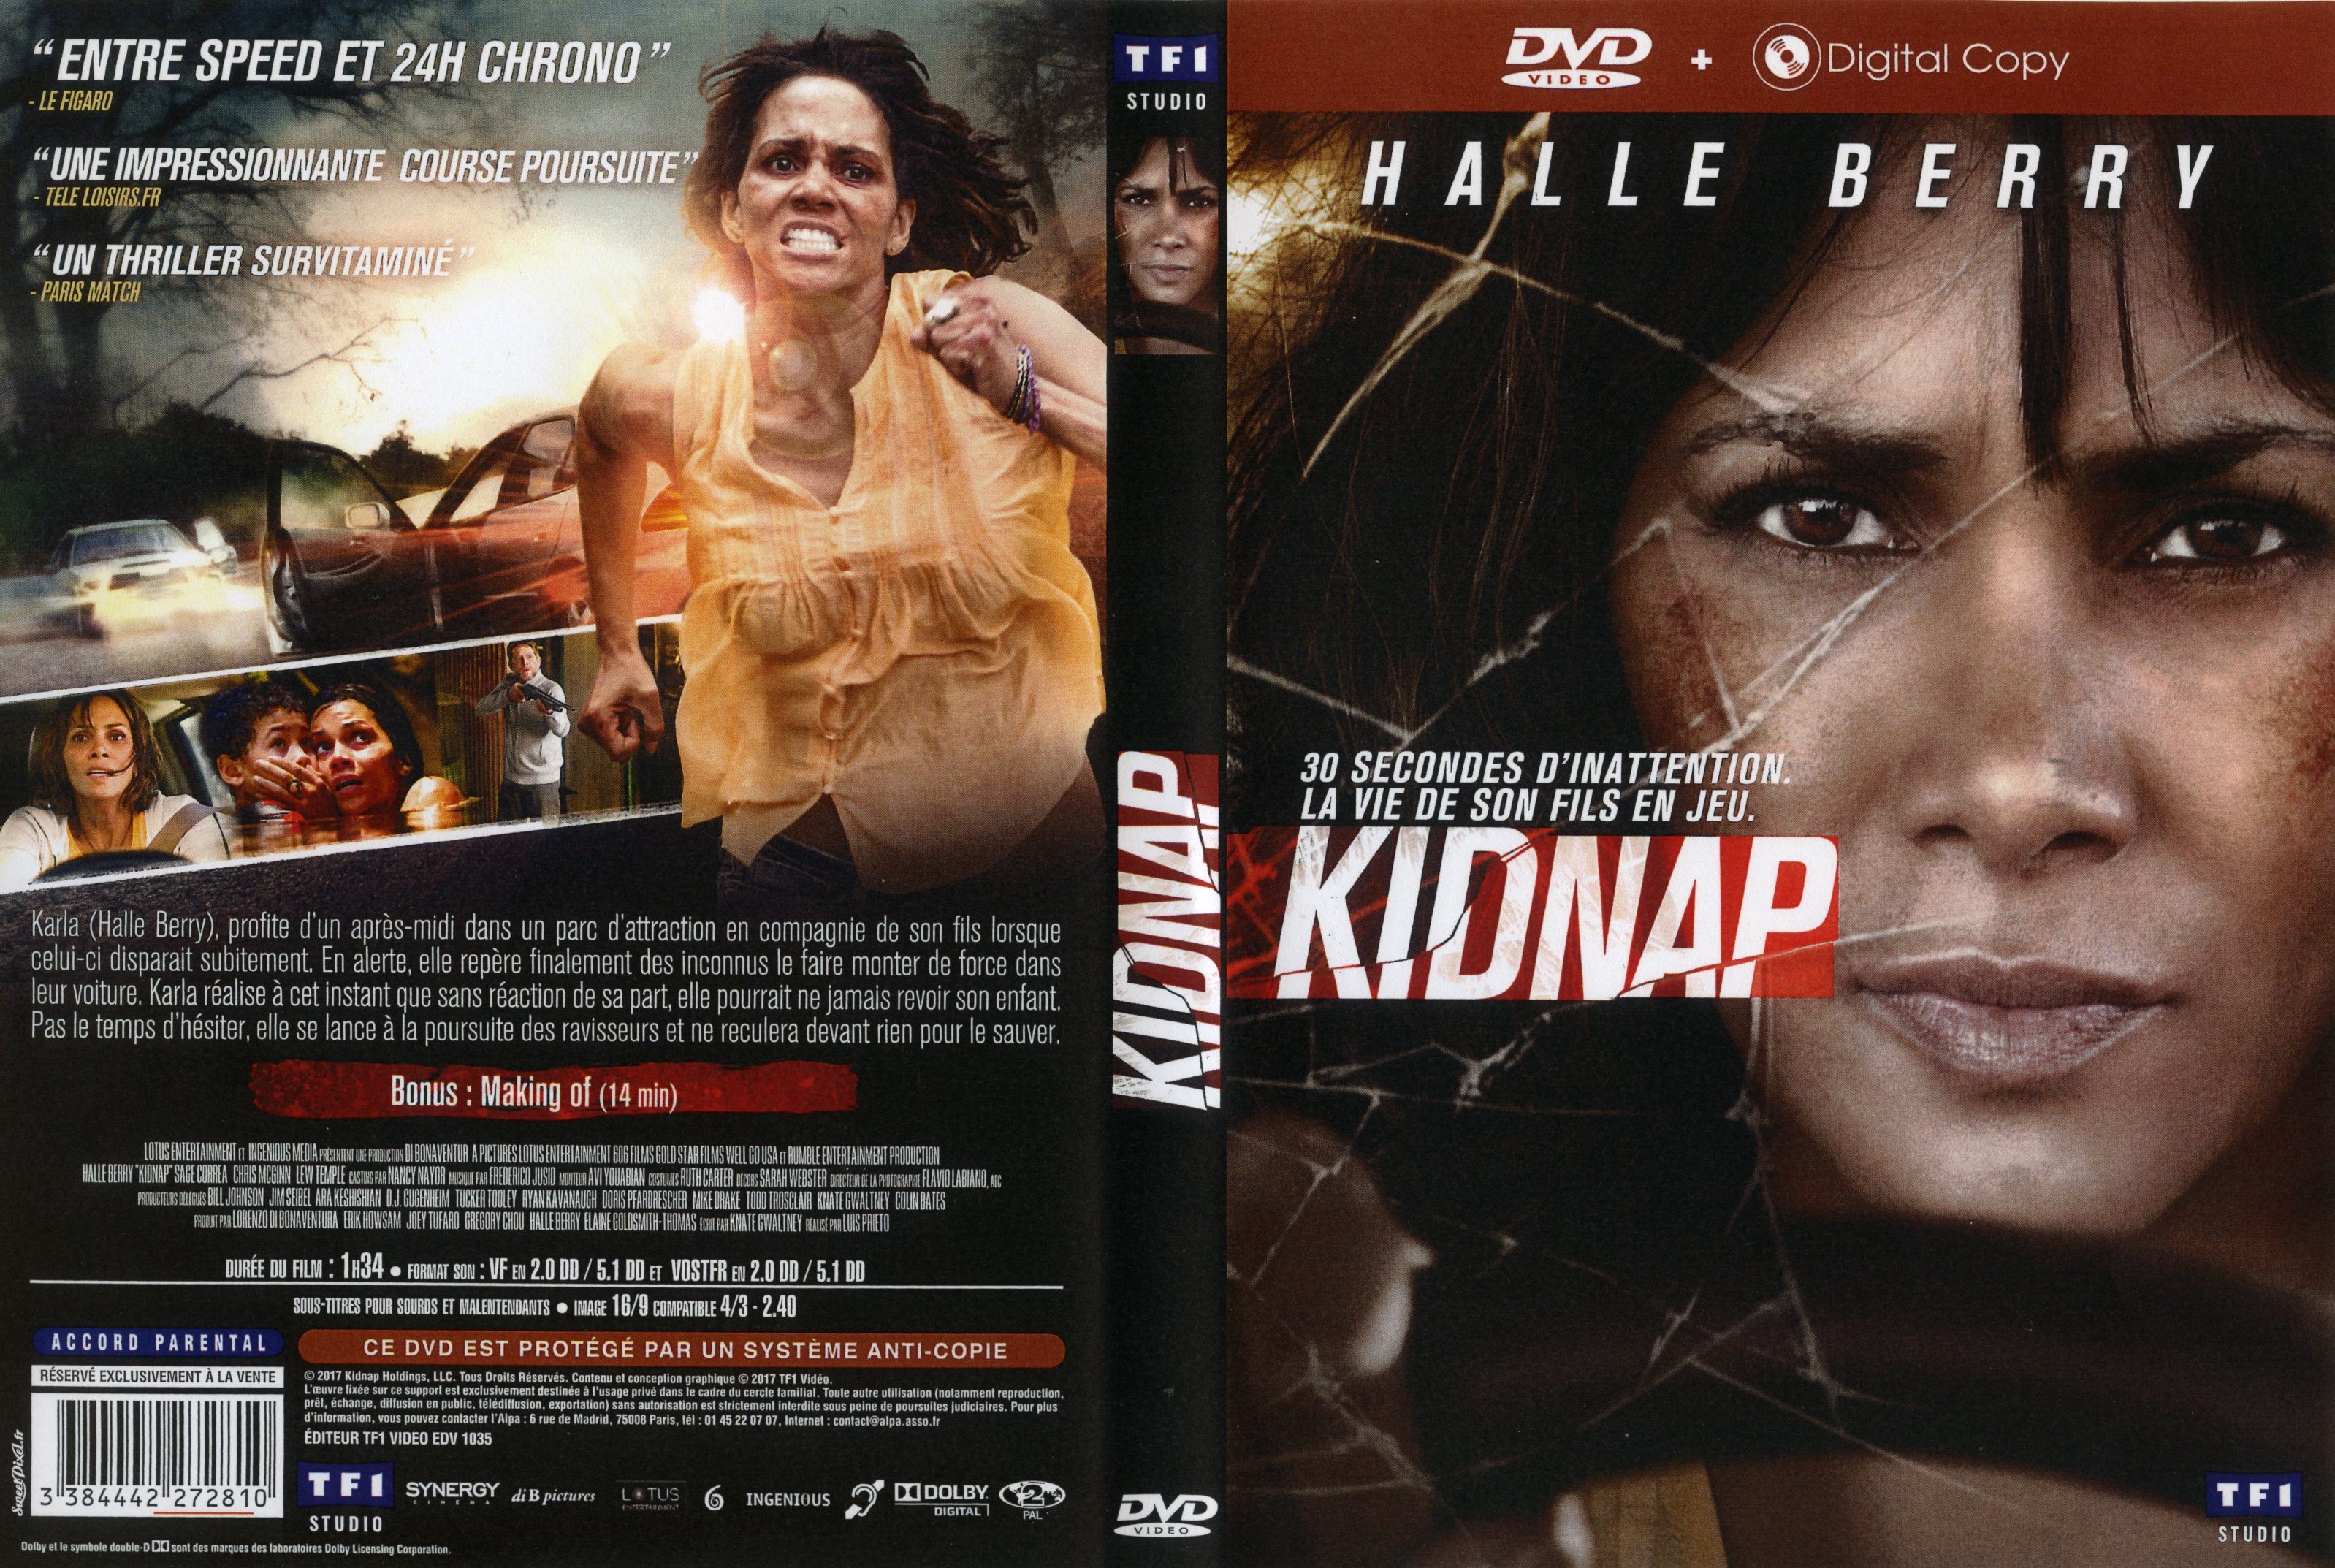 Jaquette DVD Kidnap